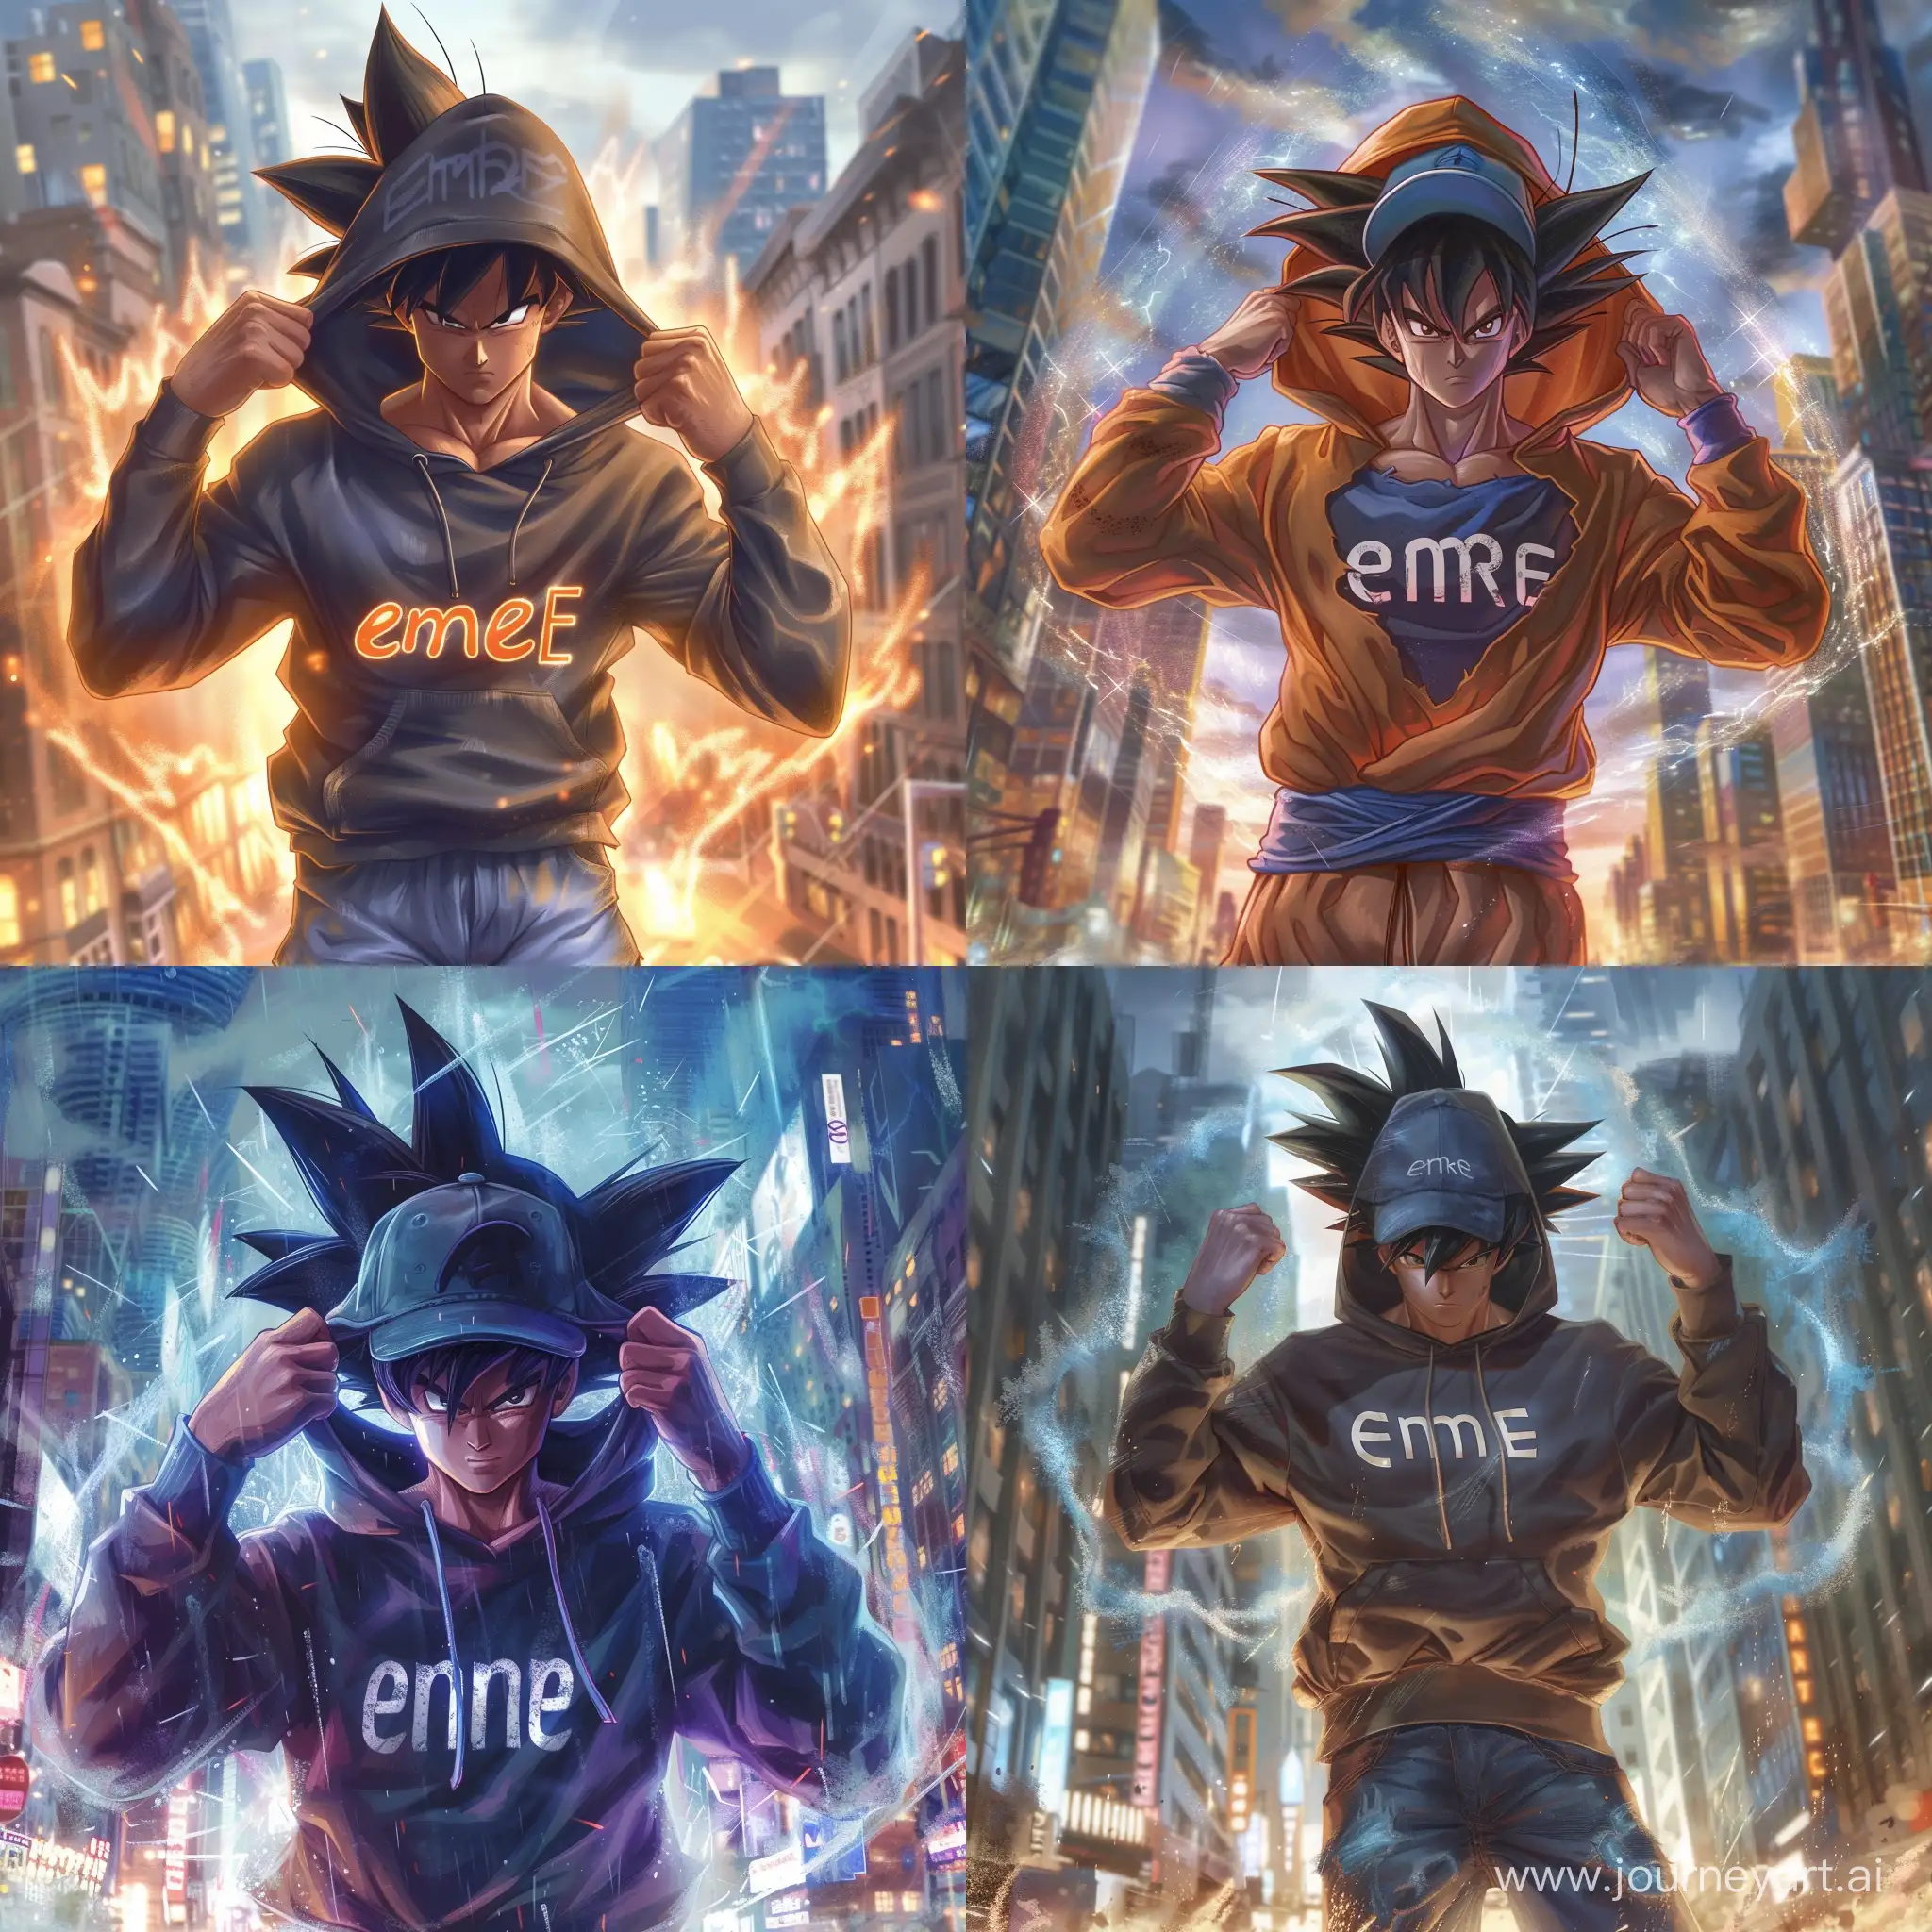 Super-Saiyan-Goku-in-emre-Hoodie-and-Cap-Dominates-Cityscape